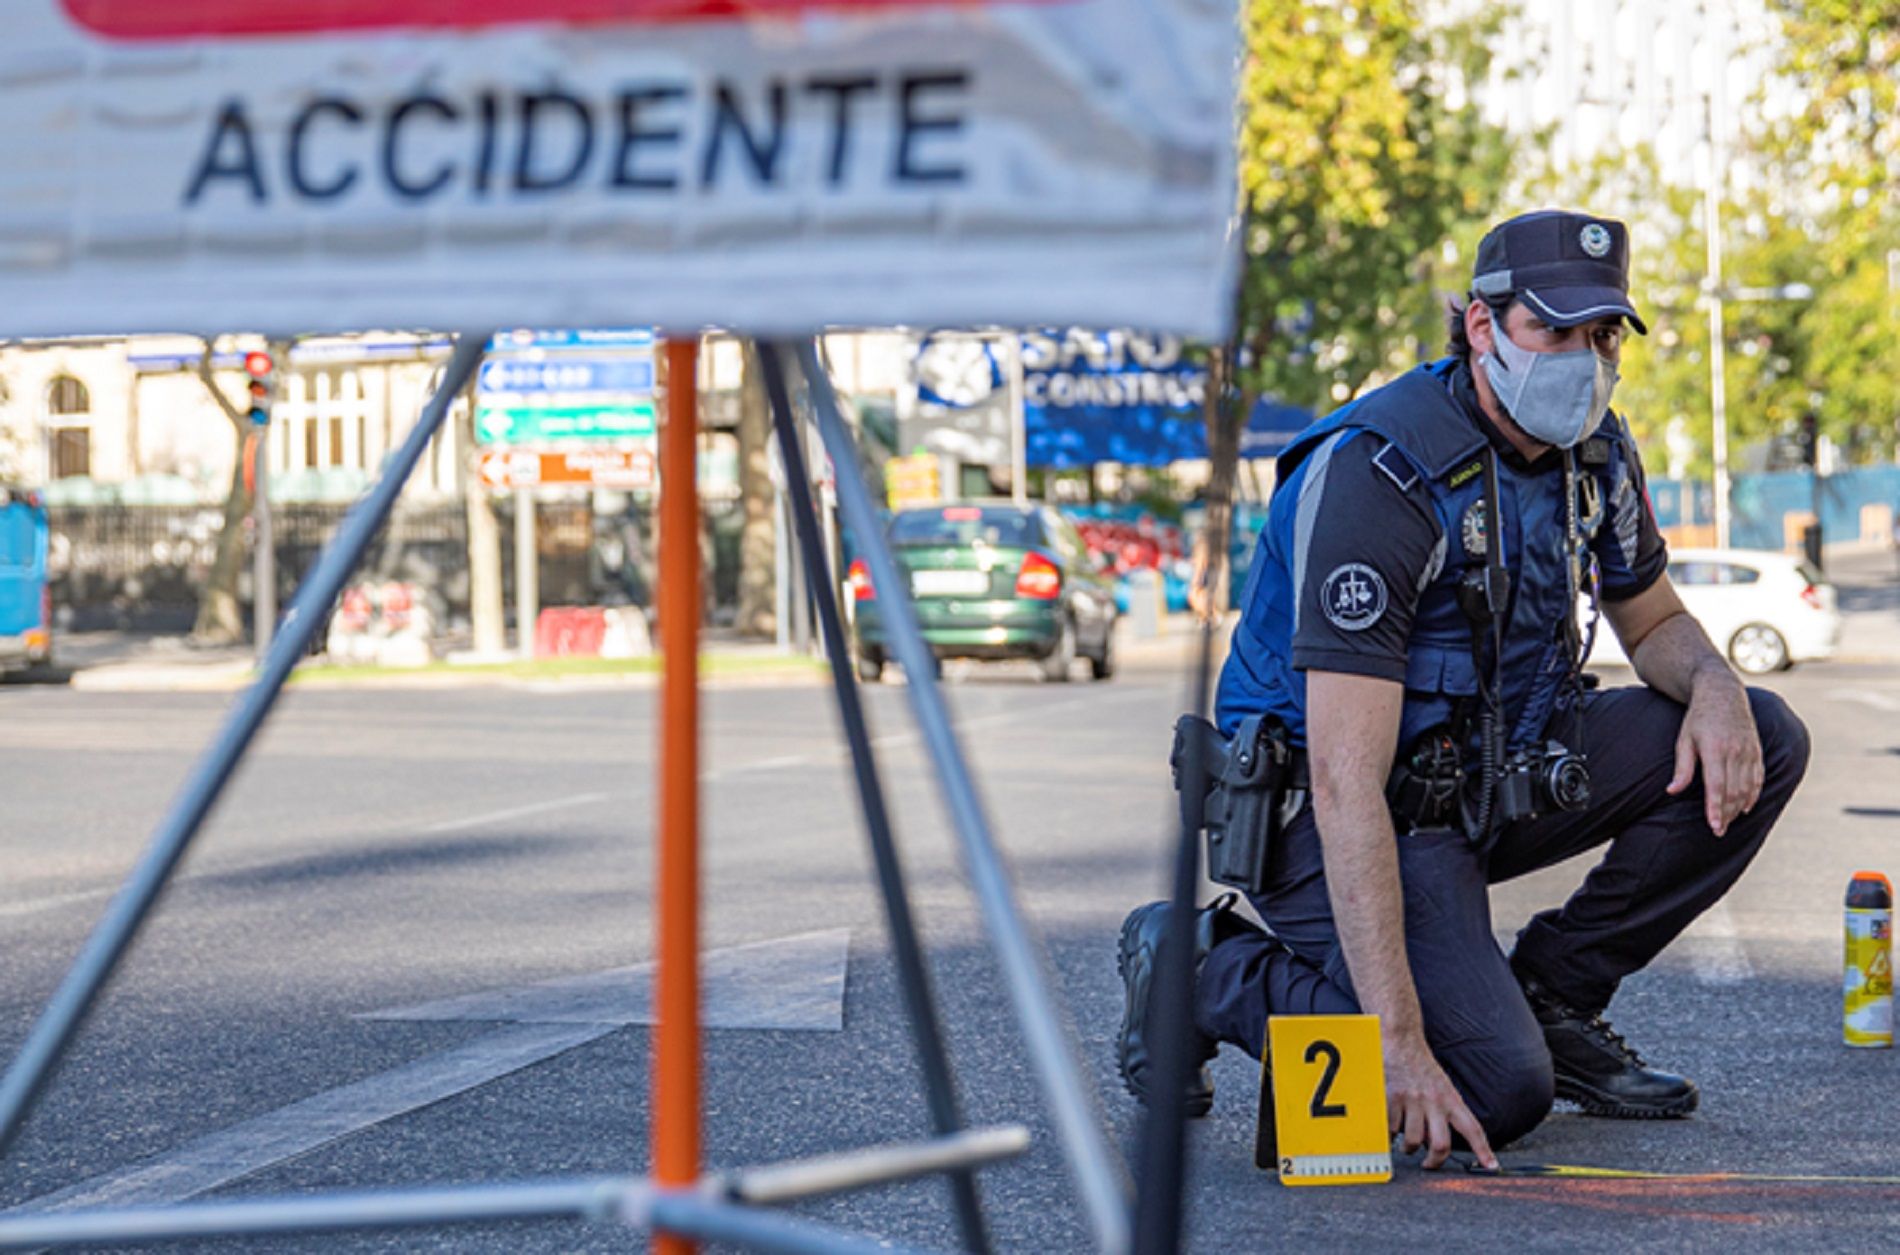 Accident / Policia Local de Madrid